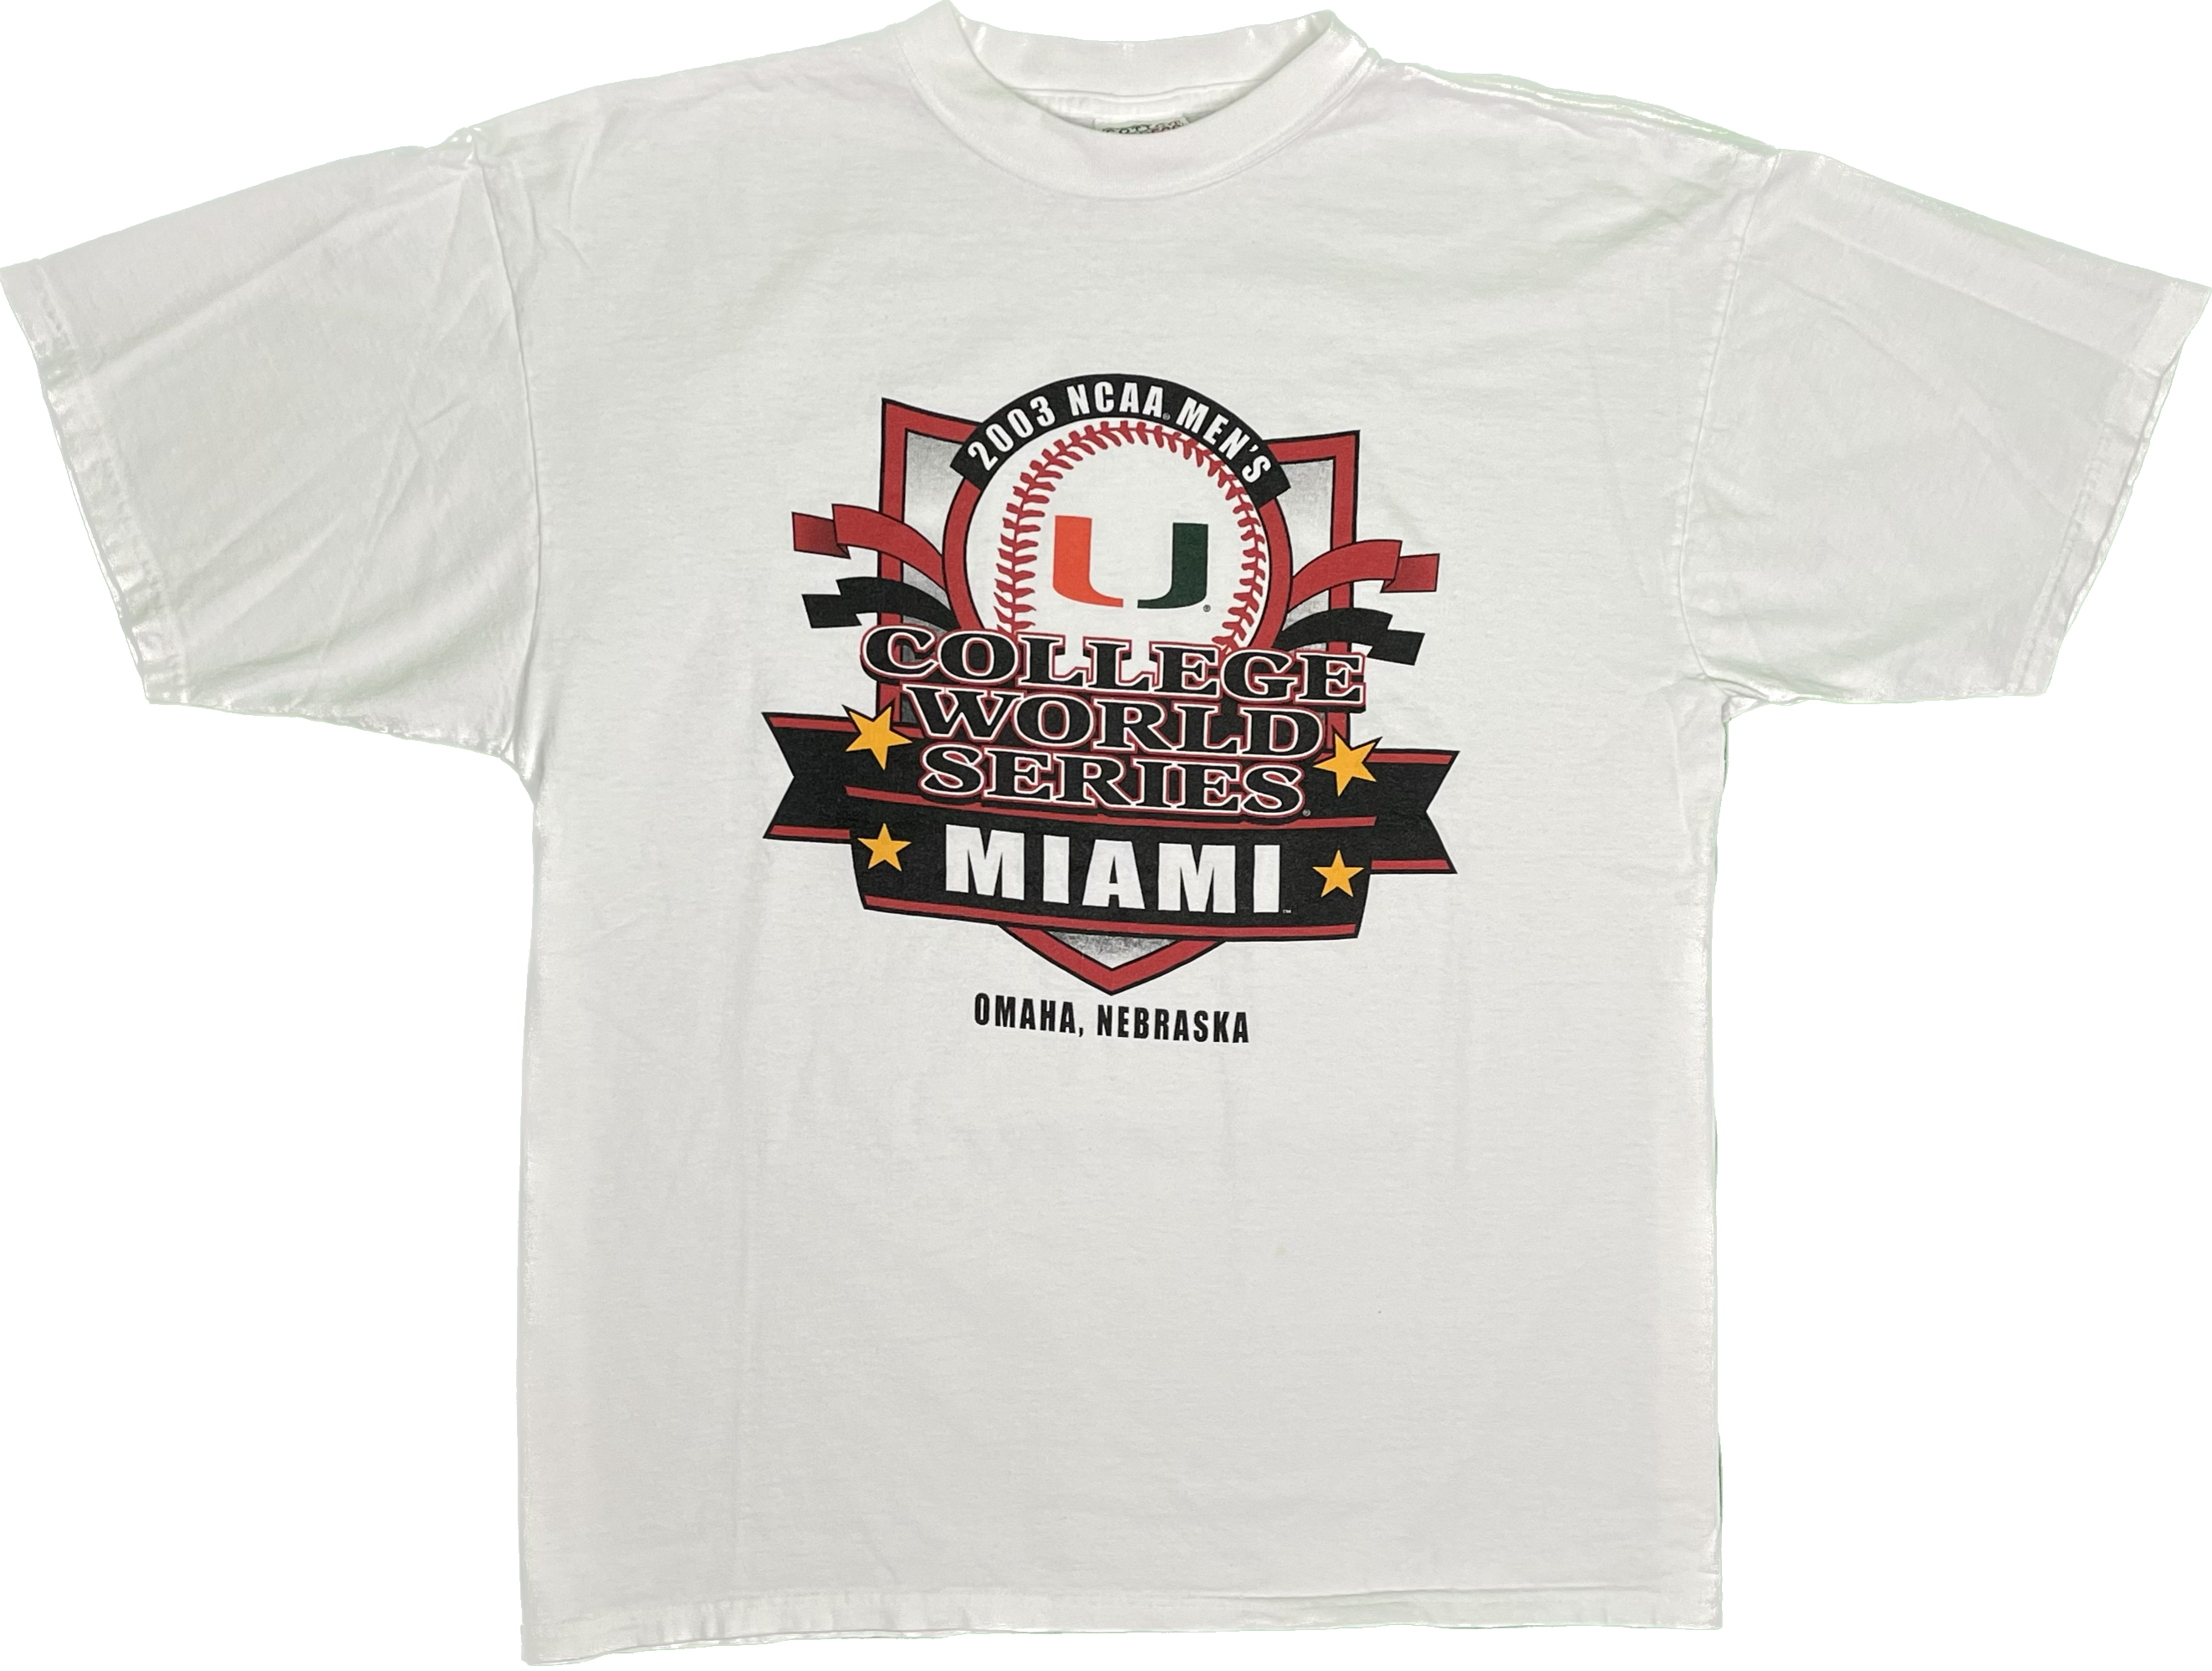 03' Florida Marlins World Series Champions Vintage T-Shirt